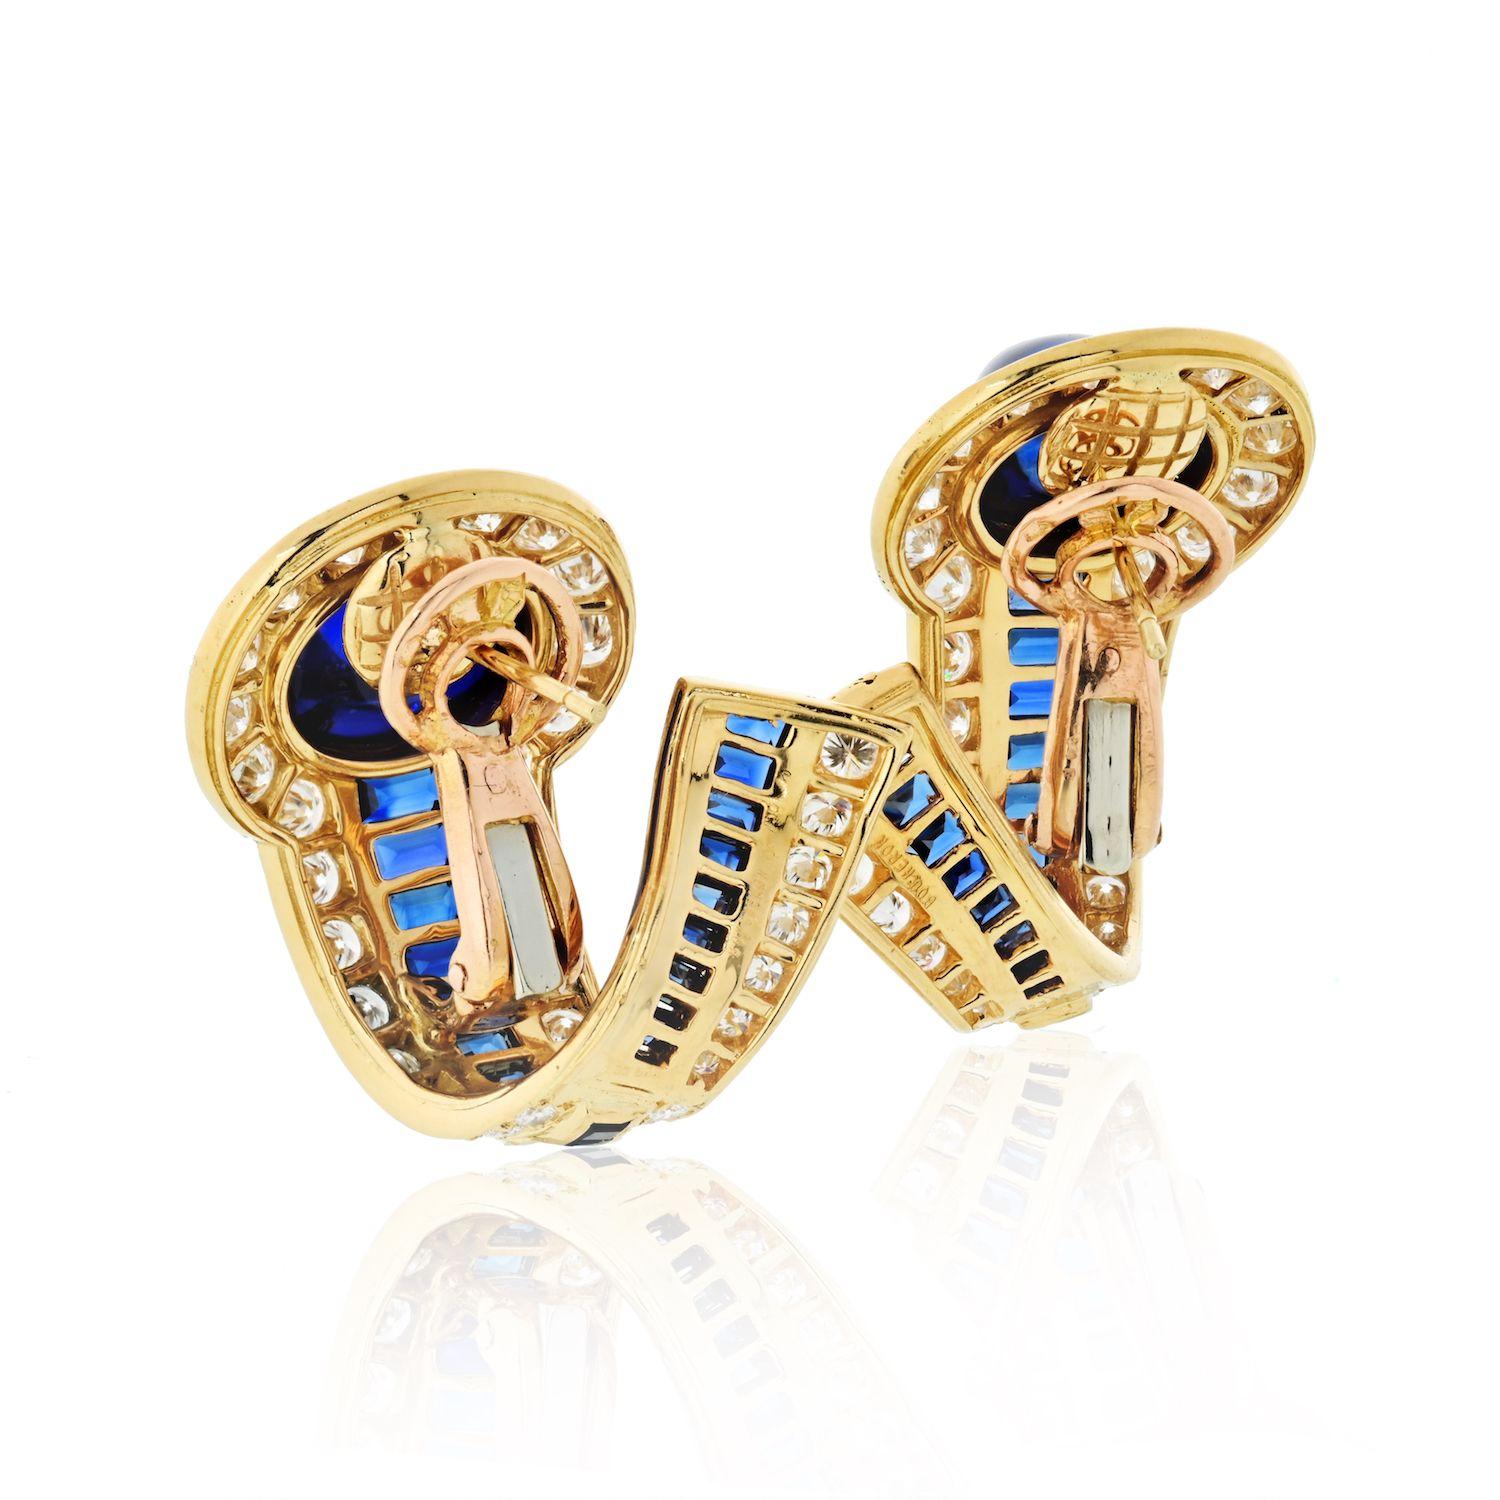 Round Cut Boucheron 18 Karat Yellow Gold Cabochon Sapphires and Diamond Earrings